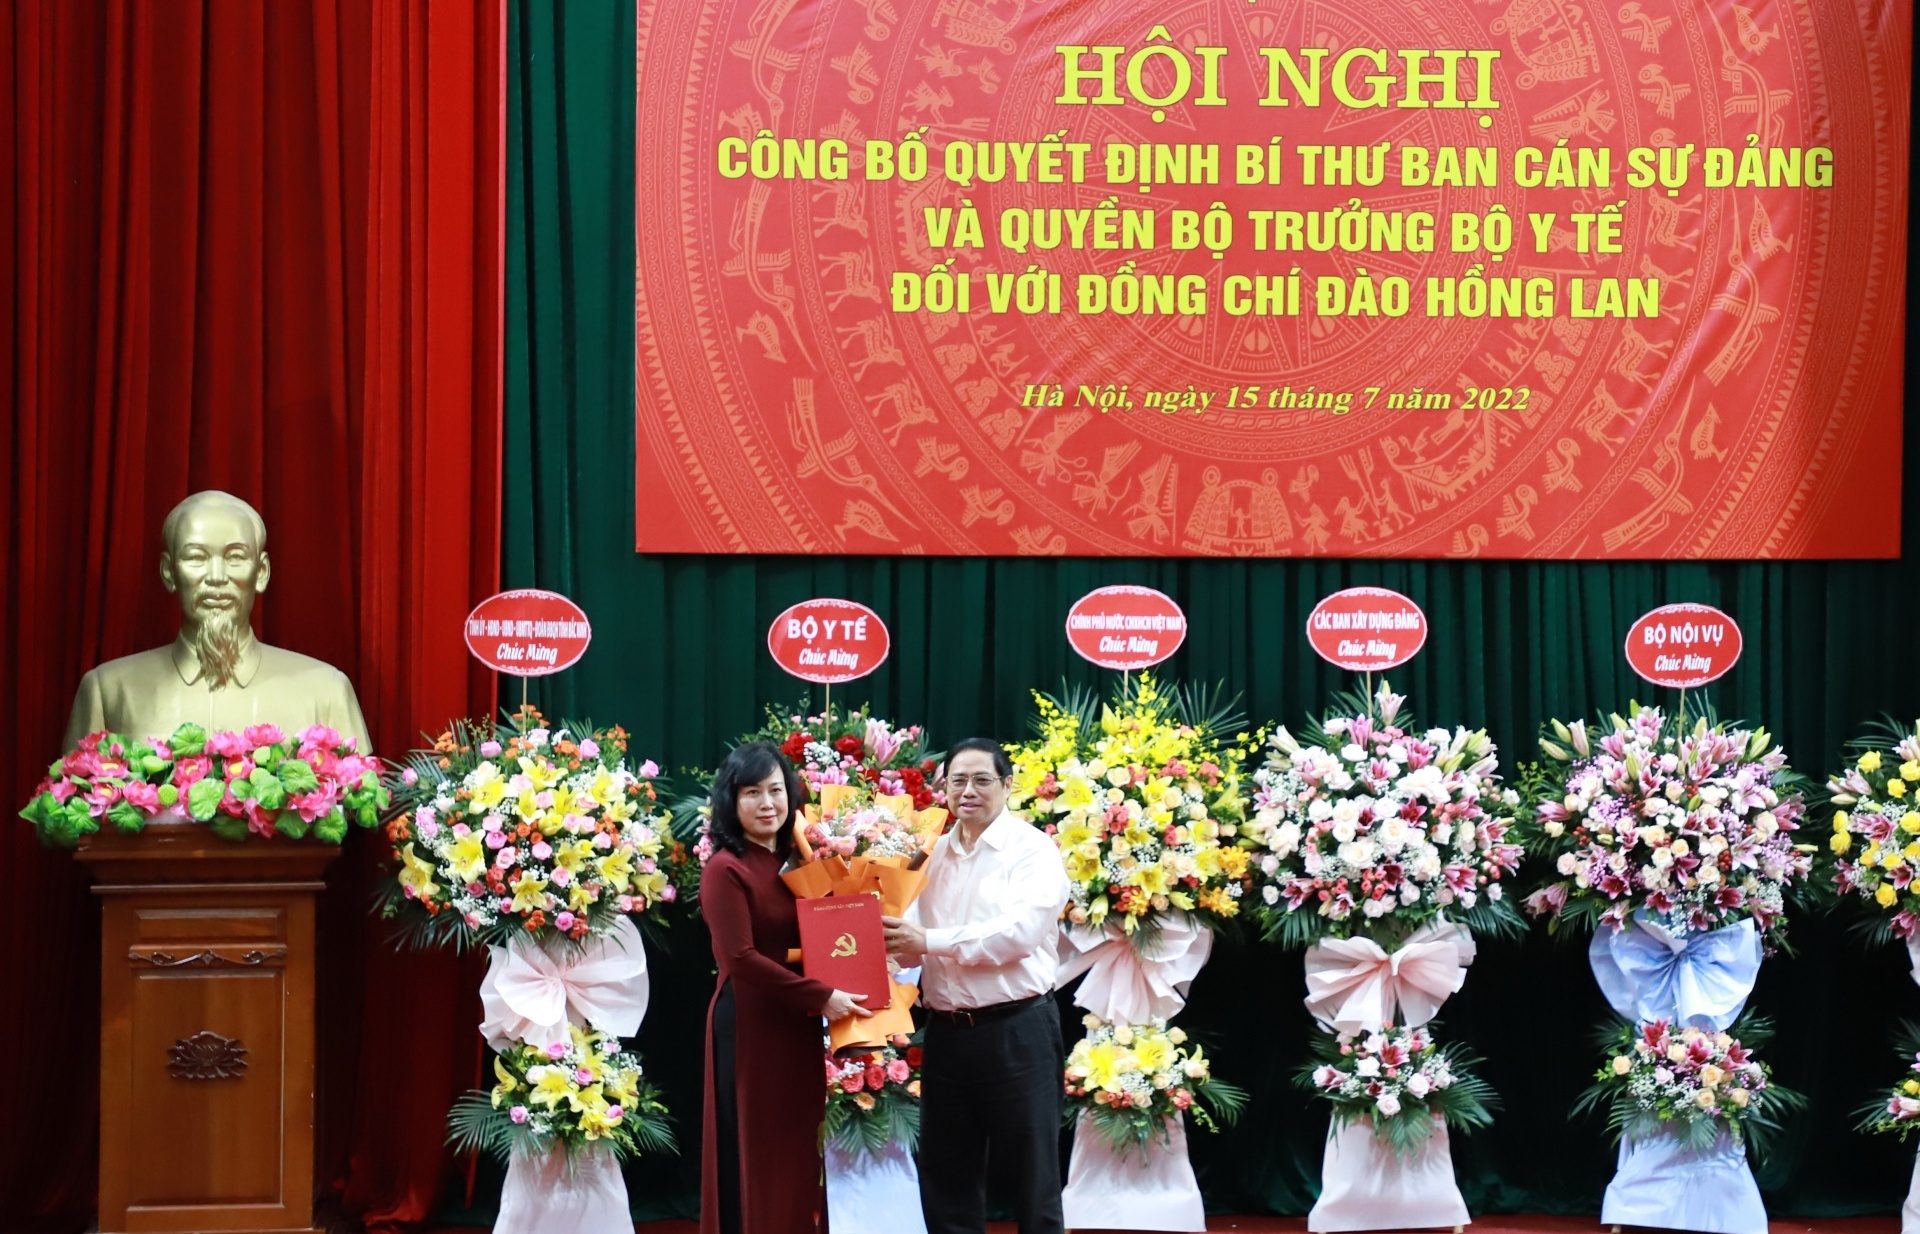 Dao Hong Lan becomes Vietnam's new health minister